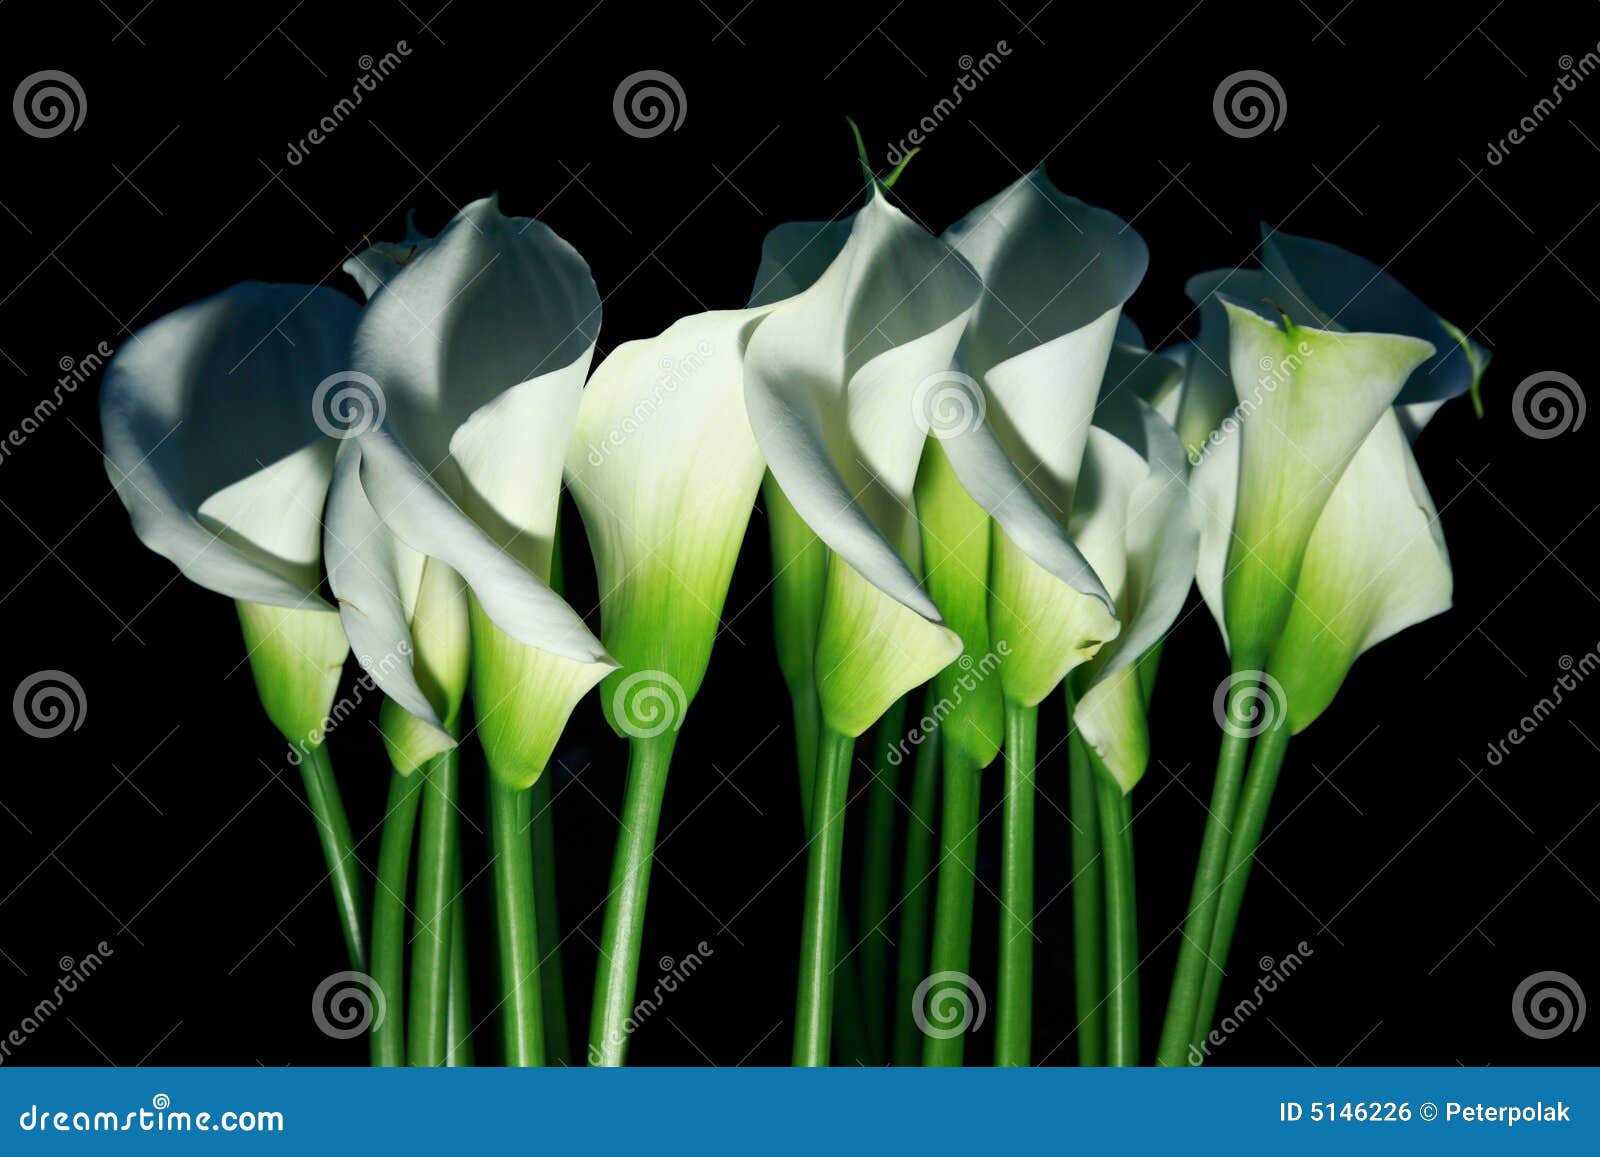 arum lilies (zantedeschia aethiopica) a.k.a. calla